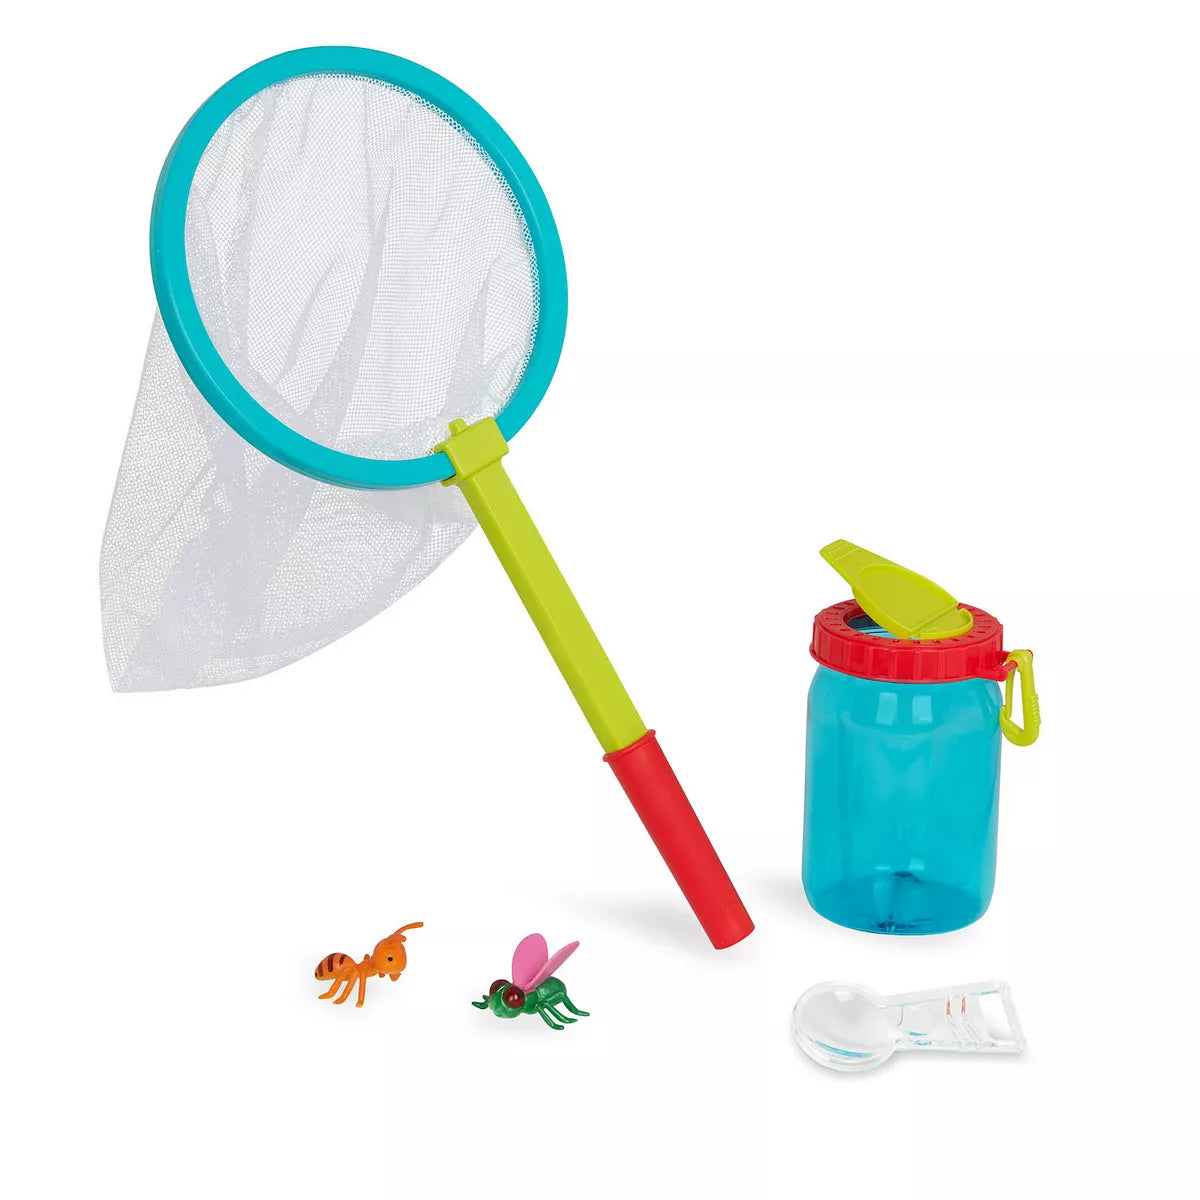 B. toys - Bug Catcher Kit With Net